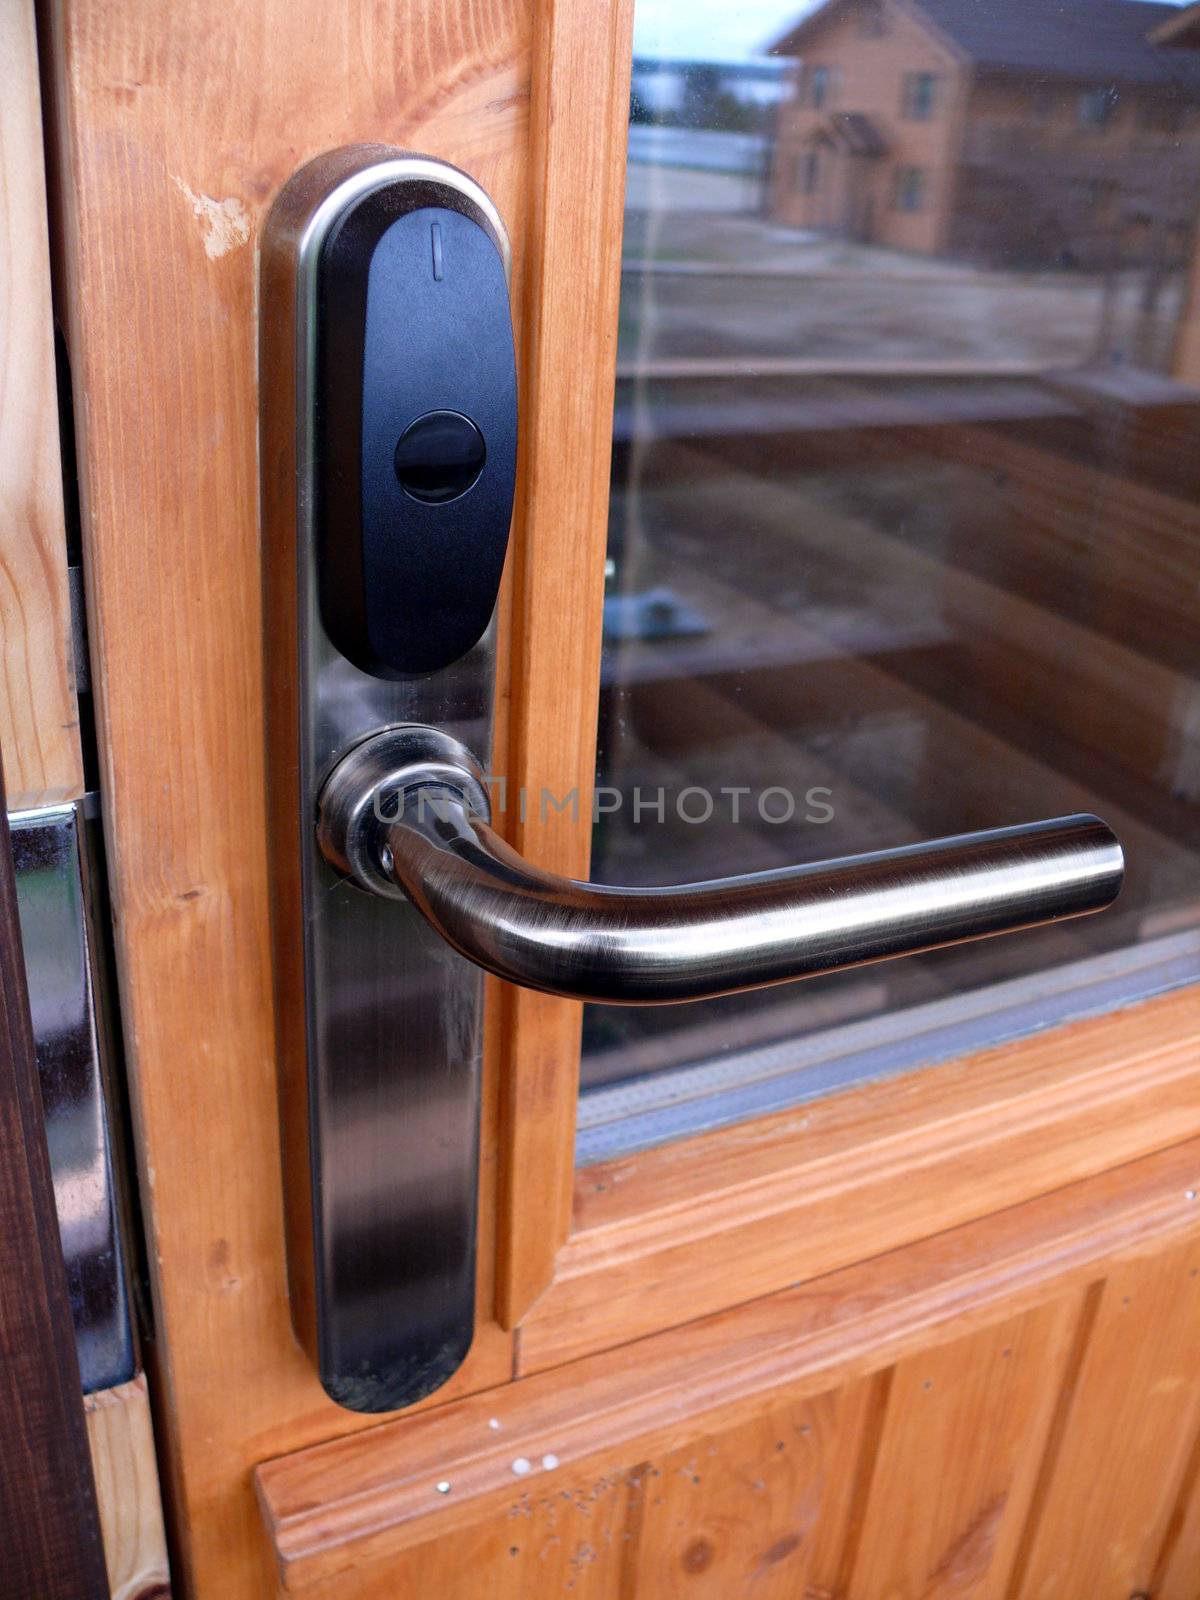 Locked door with keycard identification system